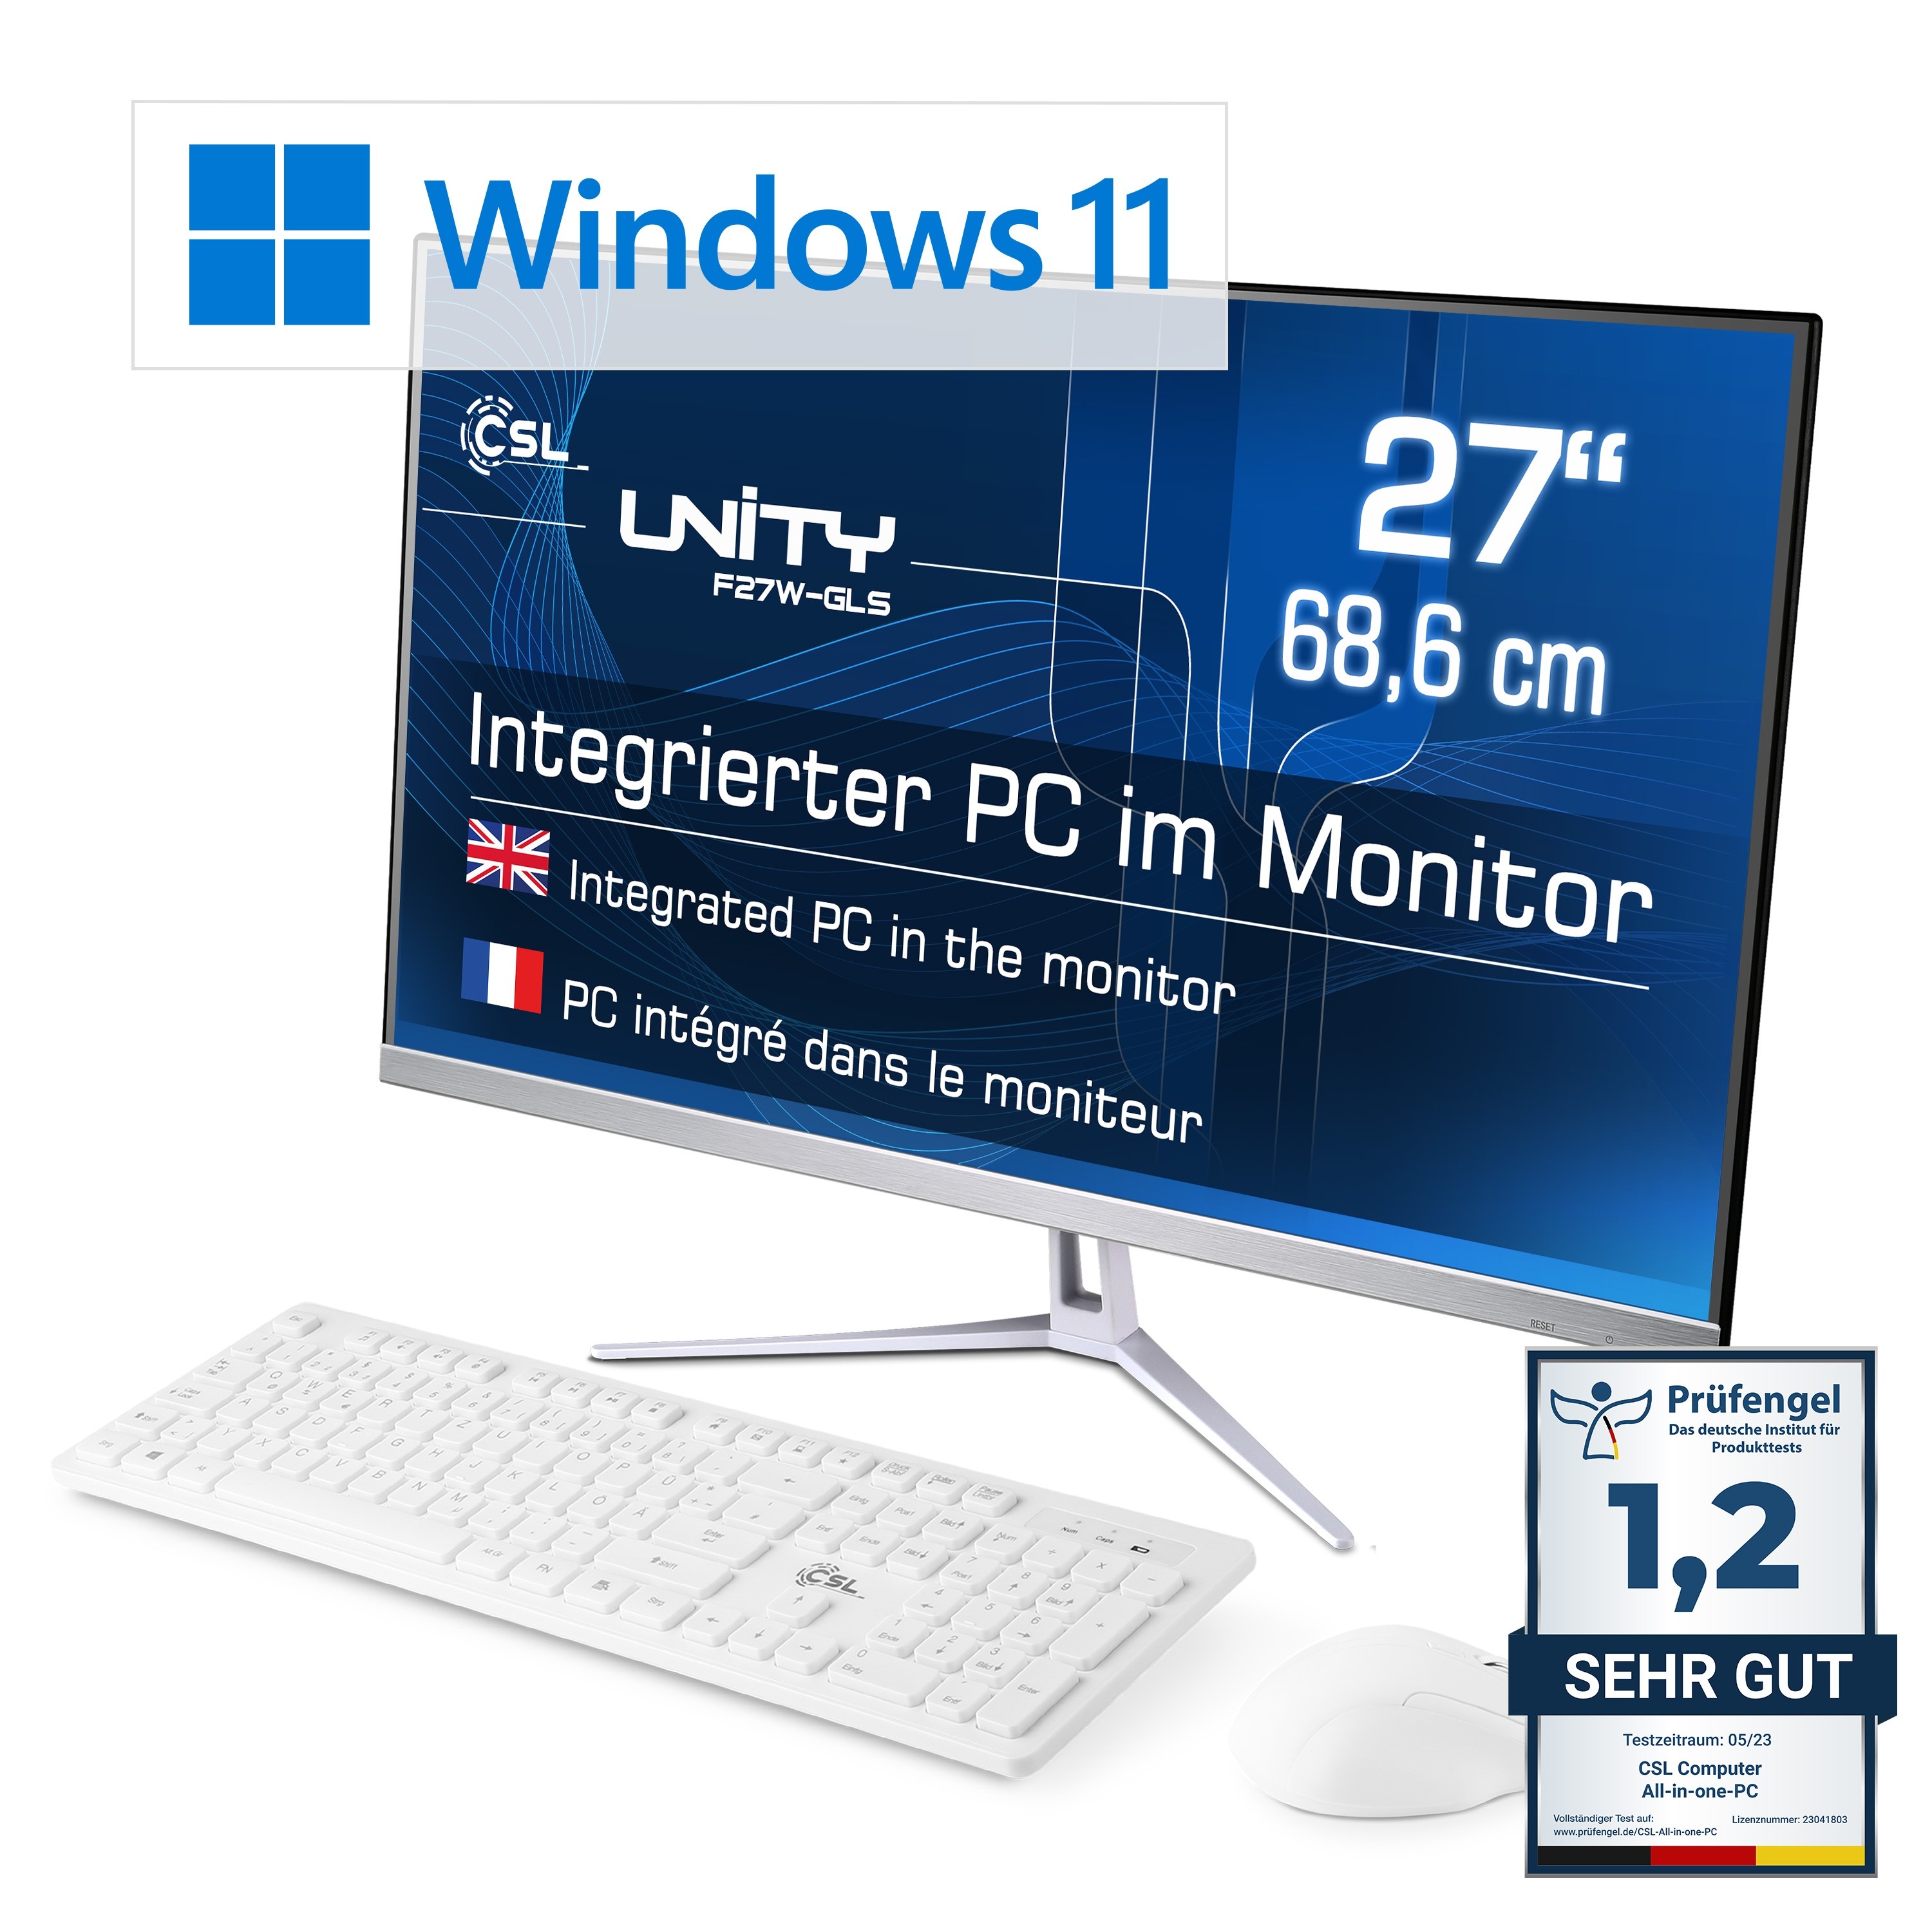 CSL Computer | All-in-One-PC CSL Unity F27W-JLS / 256 GB / 16 GB RAM /  Windows 11 Home